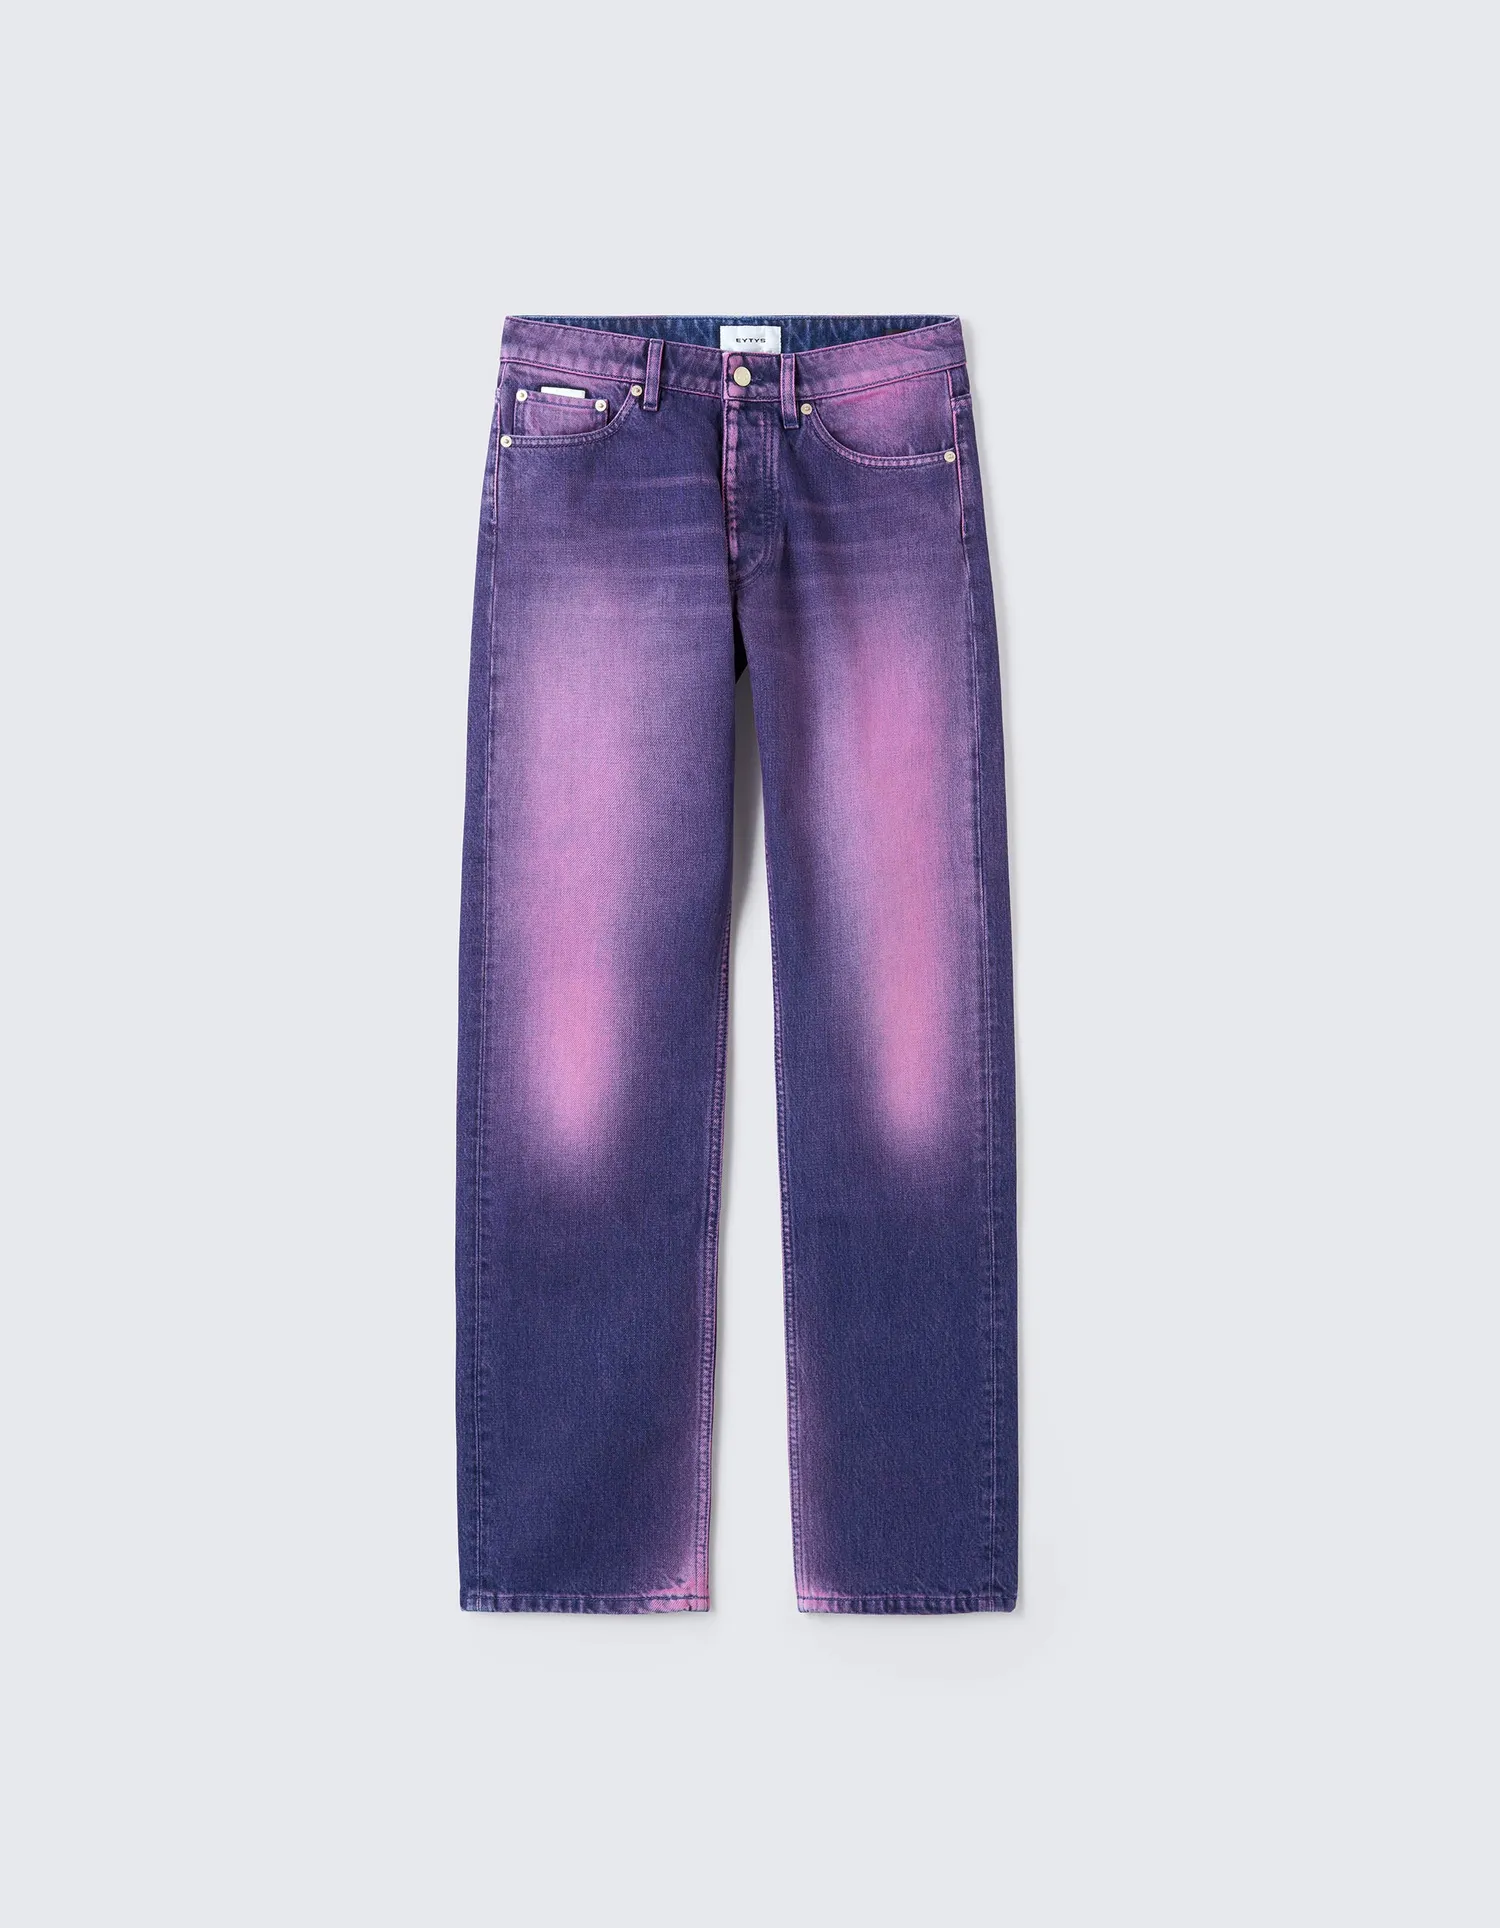 EYTYS Orion Purpurite Jeans | EYTYS